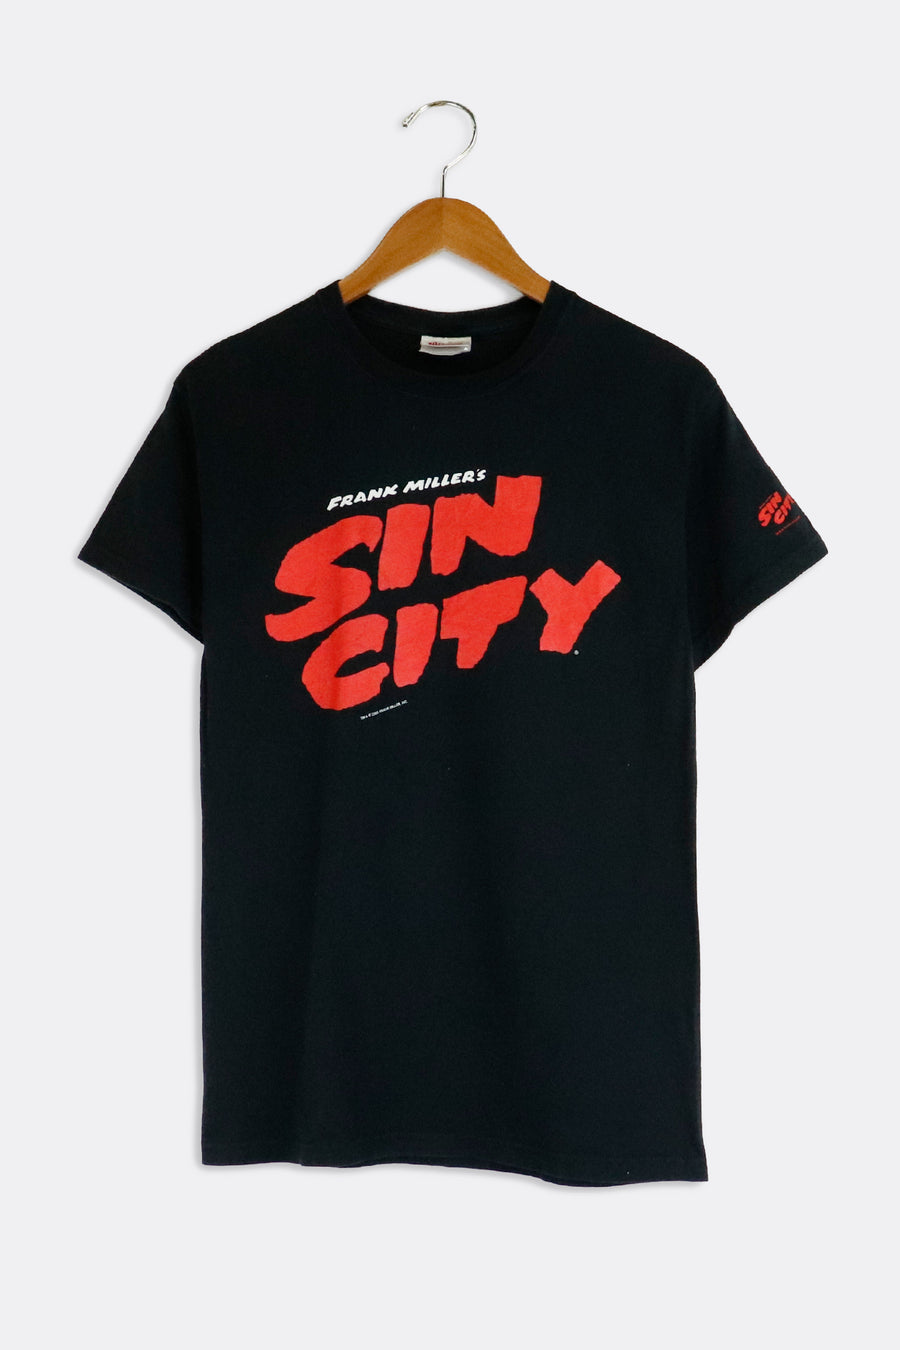 Vintage 2005 Frank Miller's Sin City T Shirt Sz S